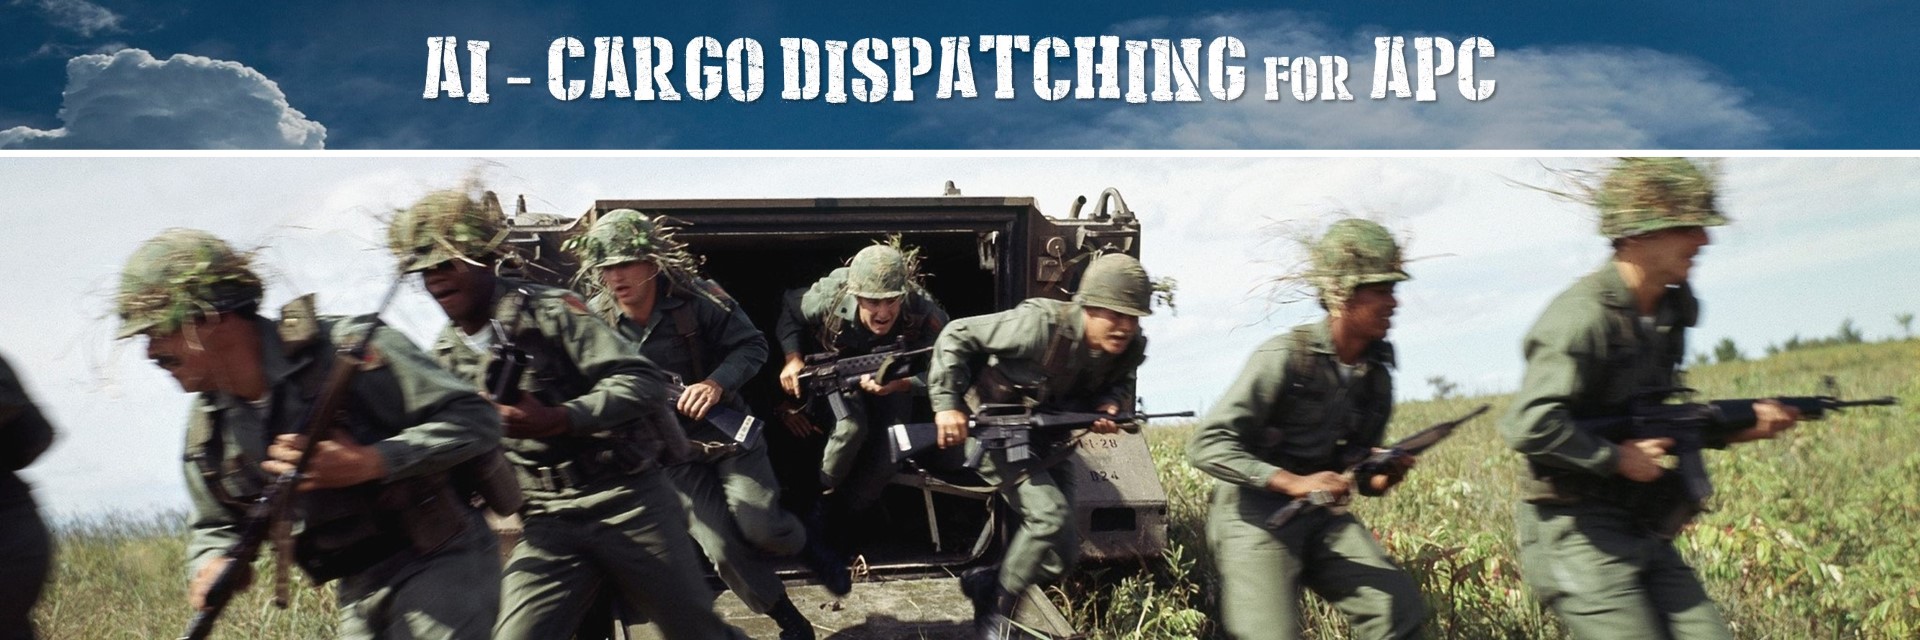 AI_Cargo_Dispatcher_APC